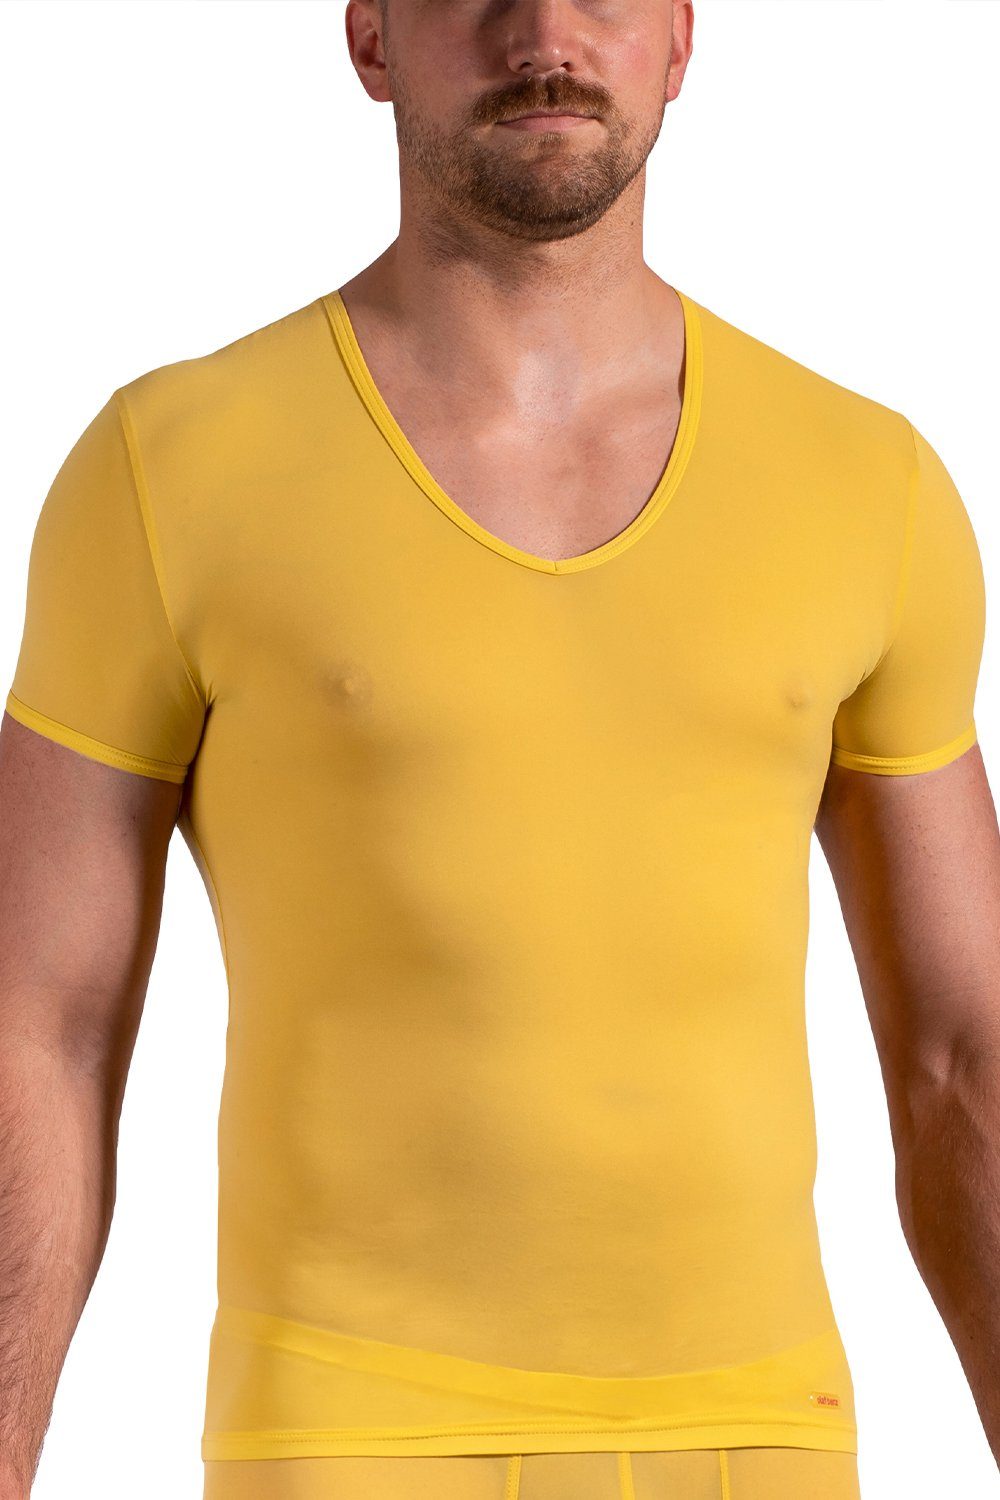 Olaf Benz T-Shirt Shirt V-Neck (Low) 106024 mustard